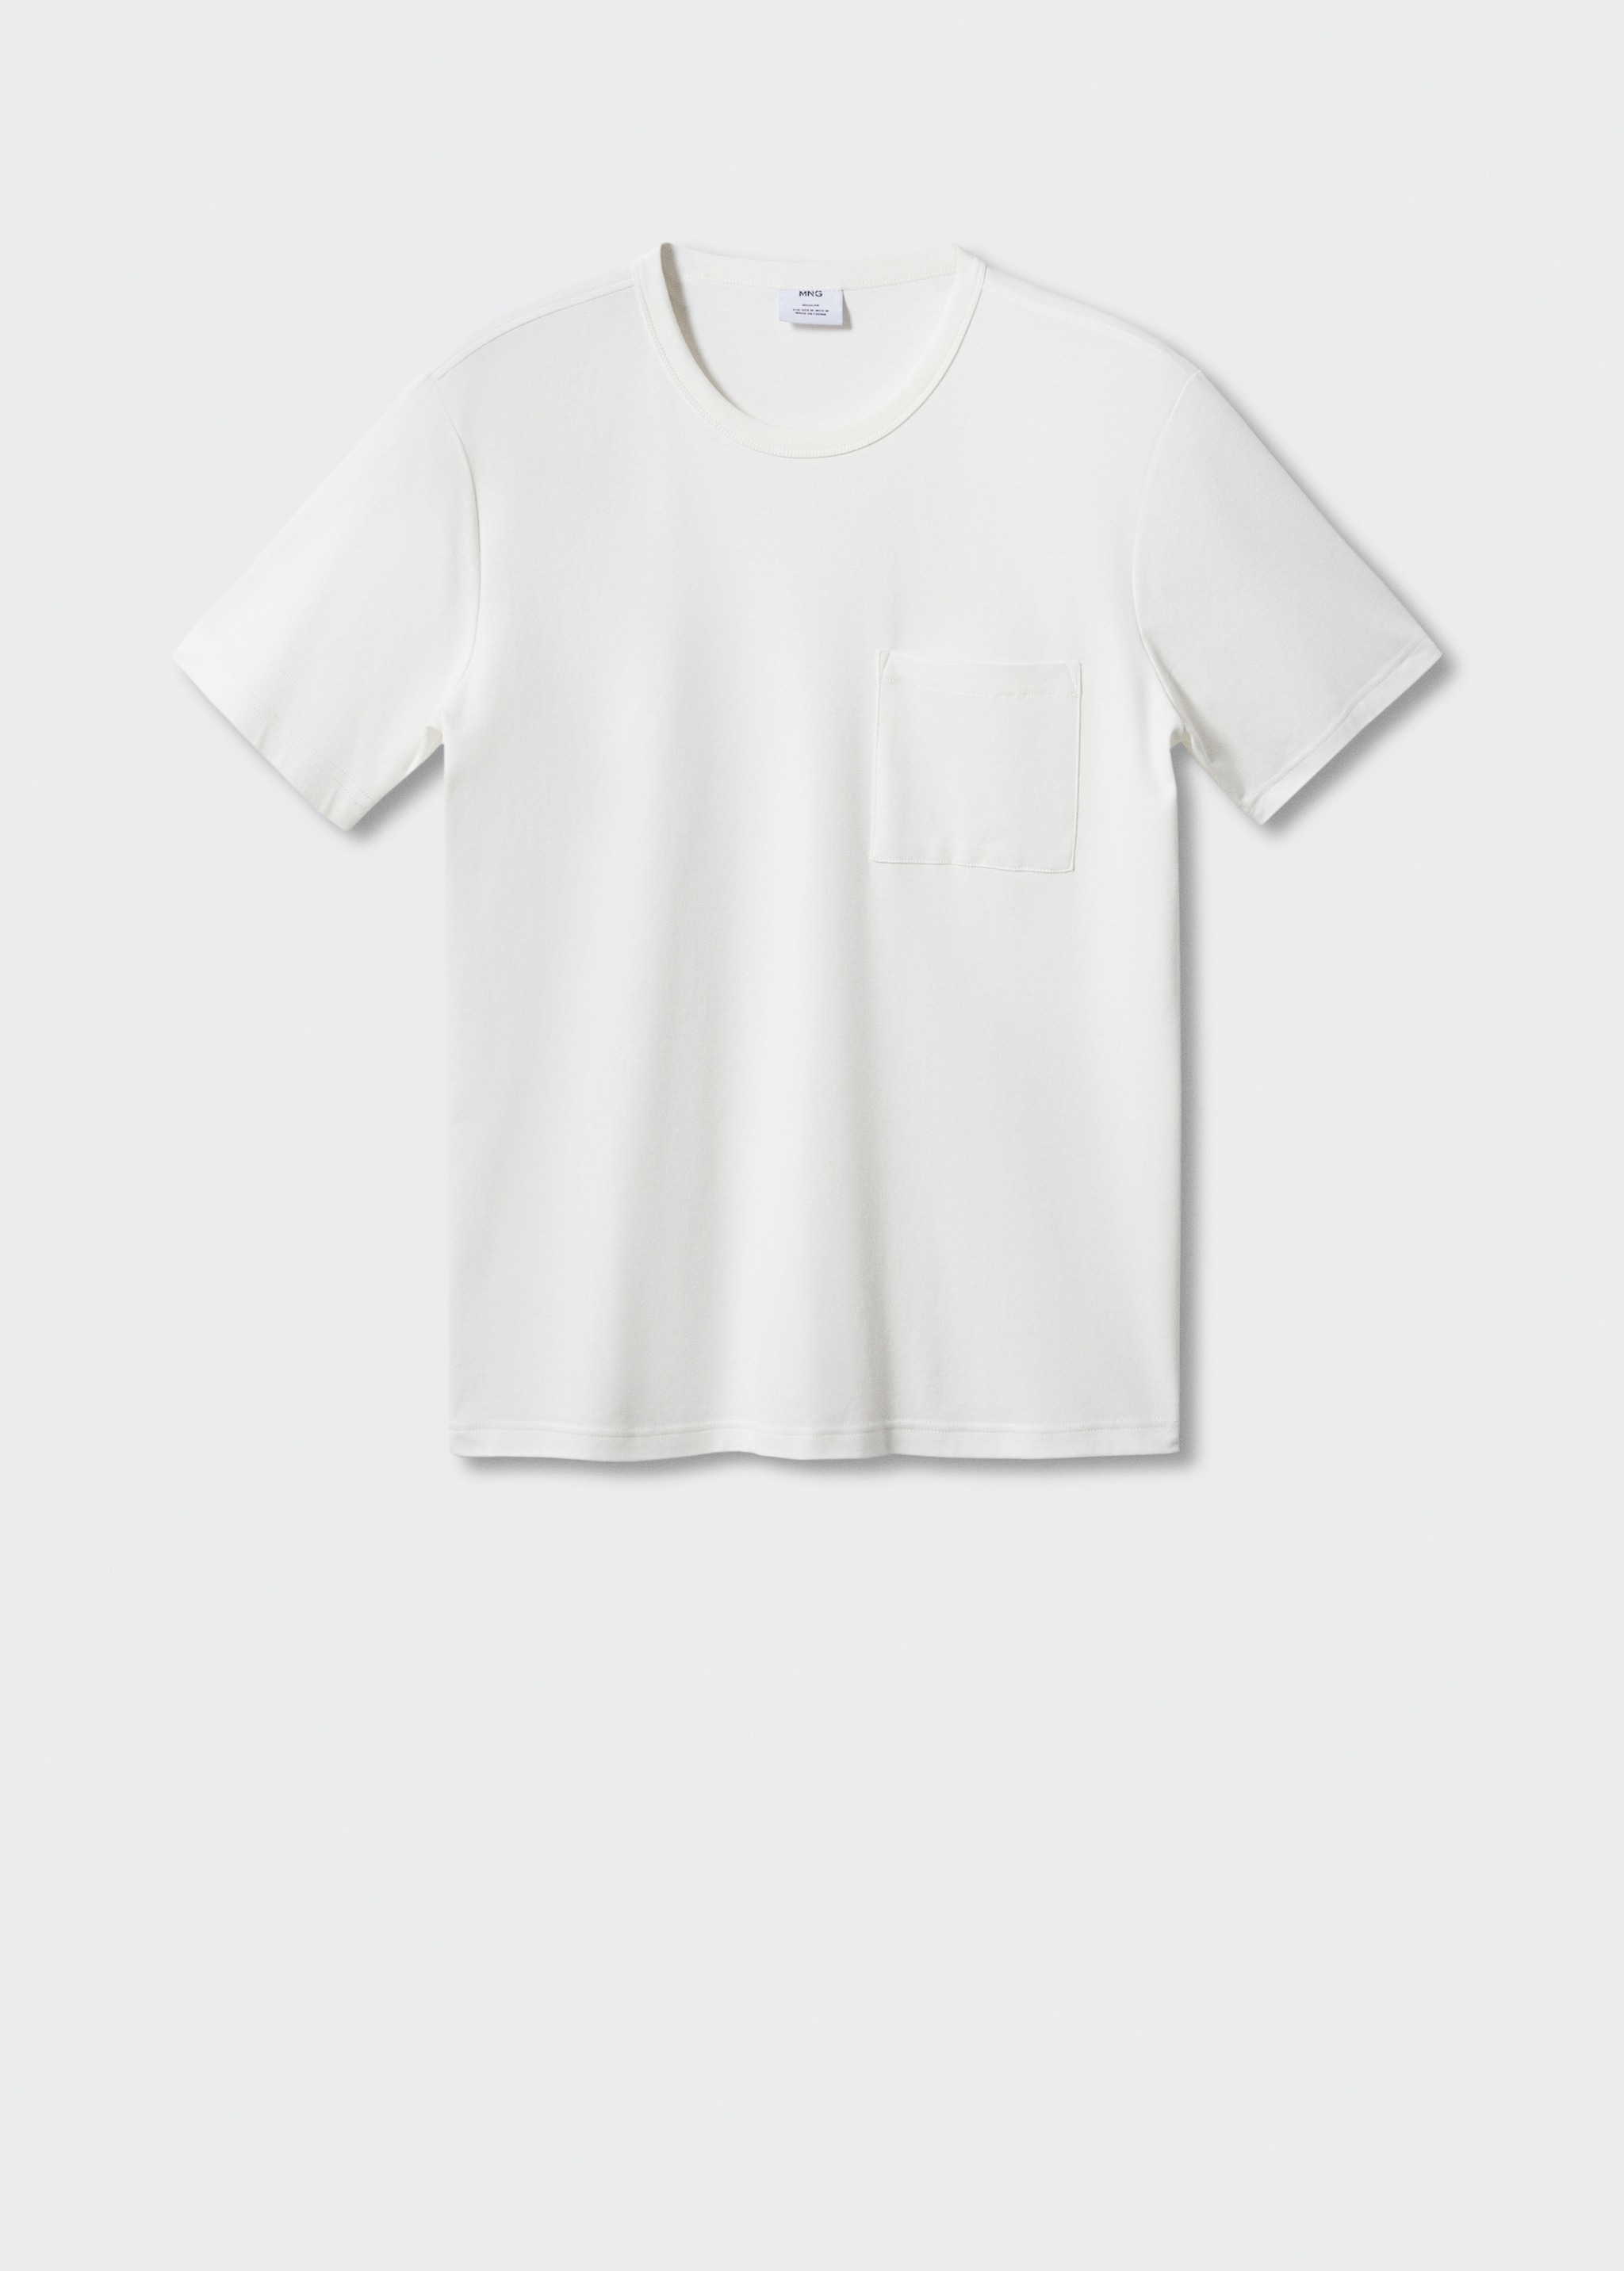 Camiseta bolsillo 100% algodón - Artículo sin modelo